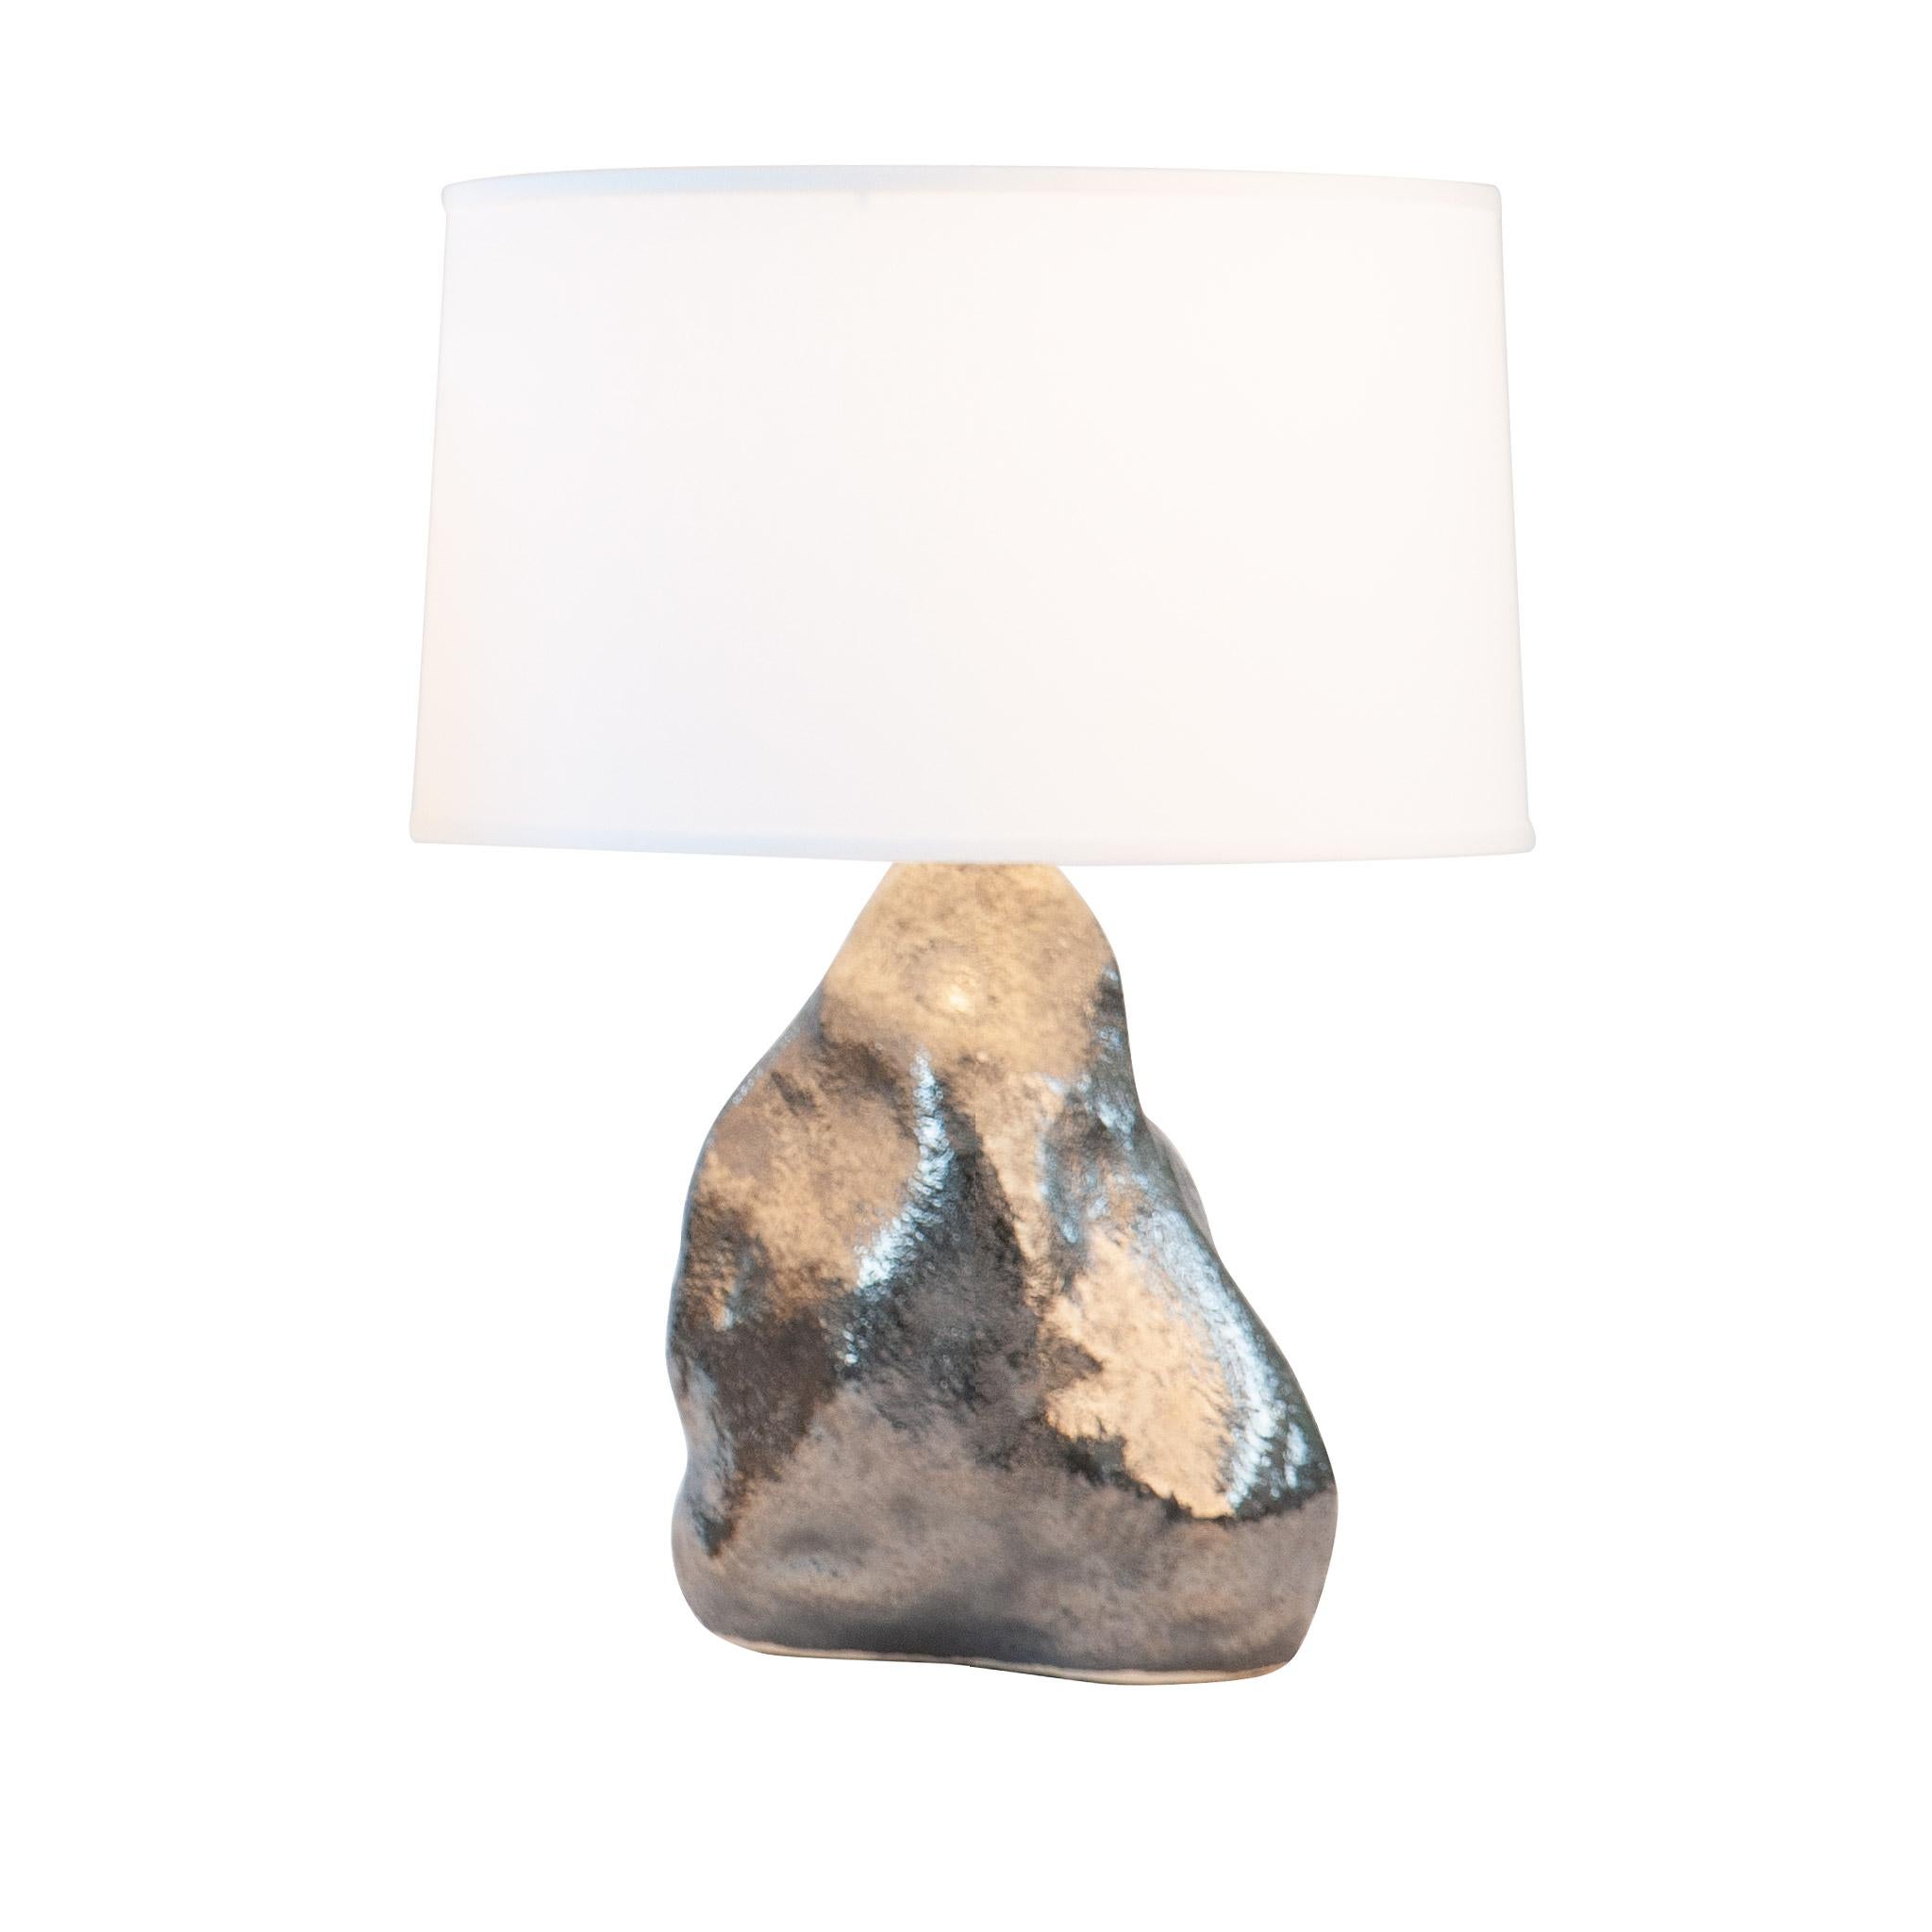 Contemporary J Schatz Studio 2018 Platinum Amorphous Table Lamp Pair, One of a Kind